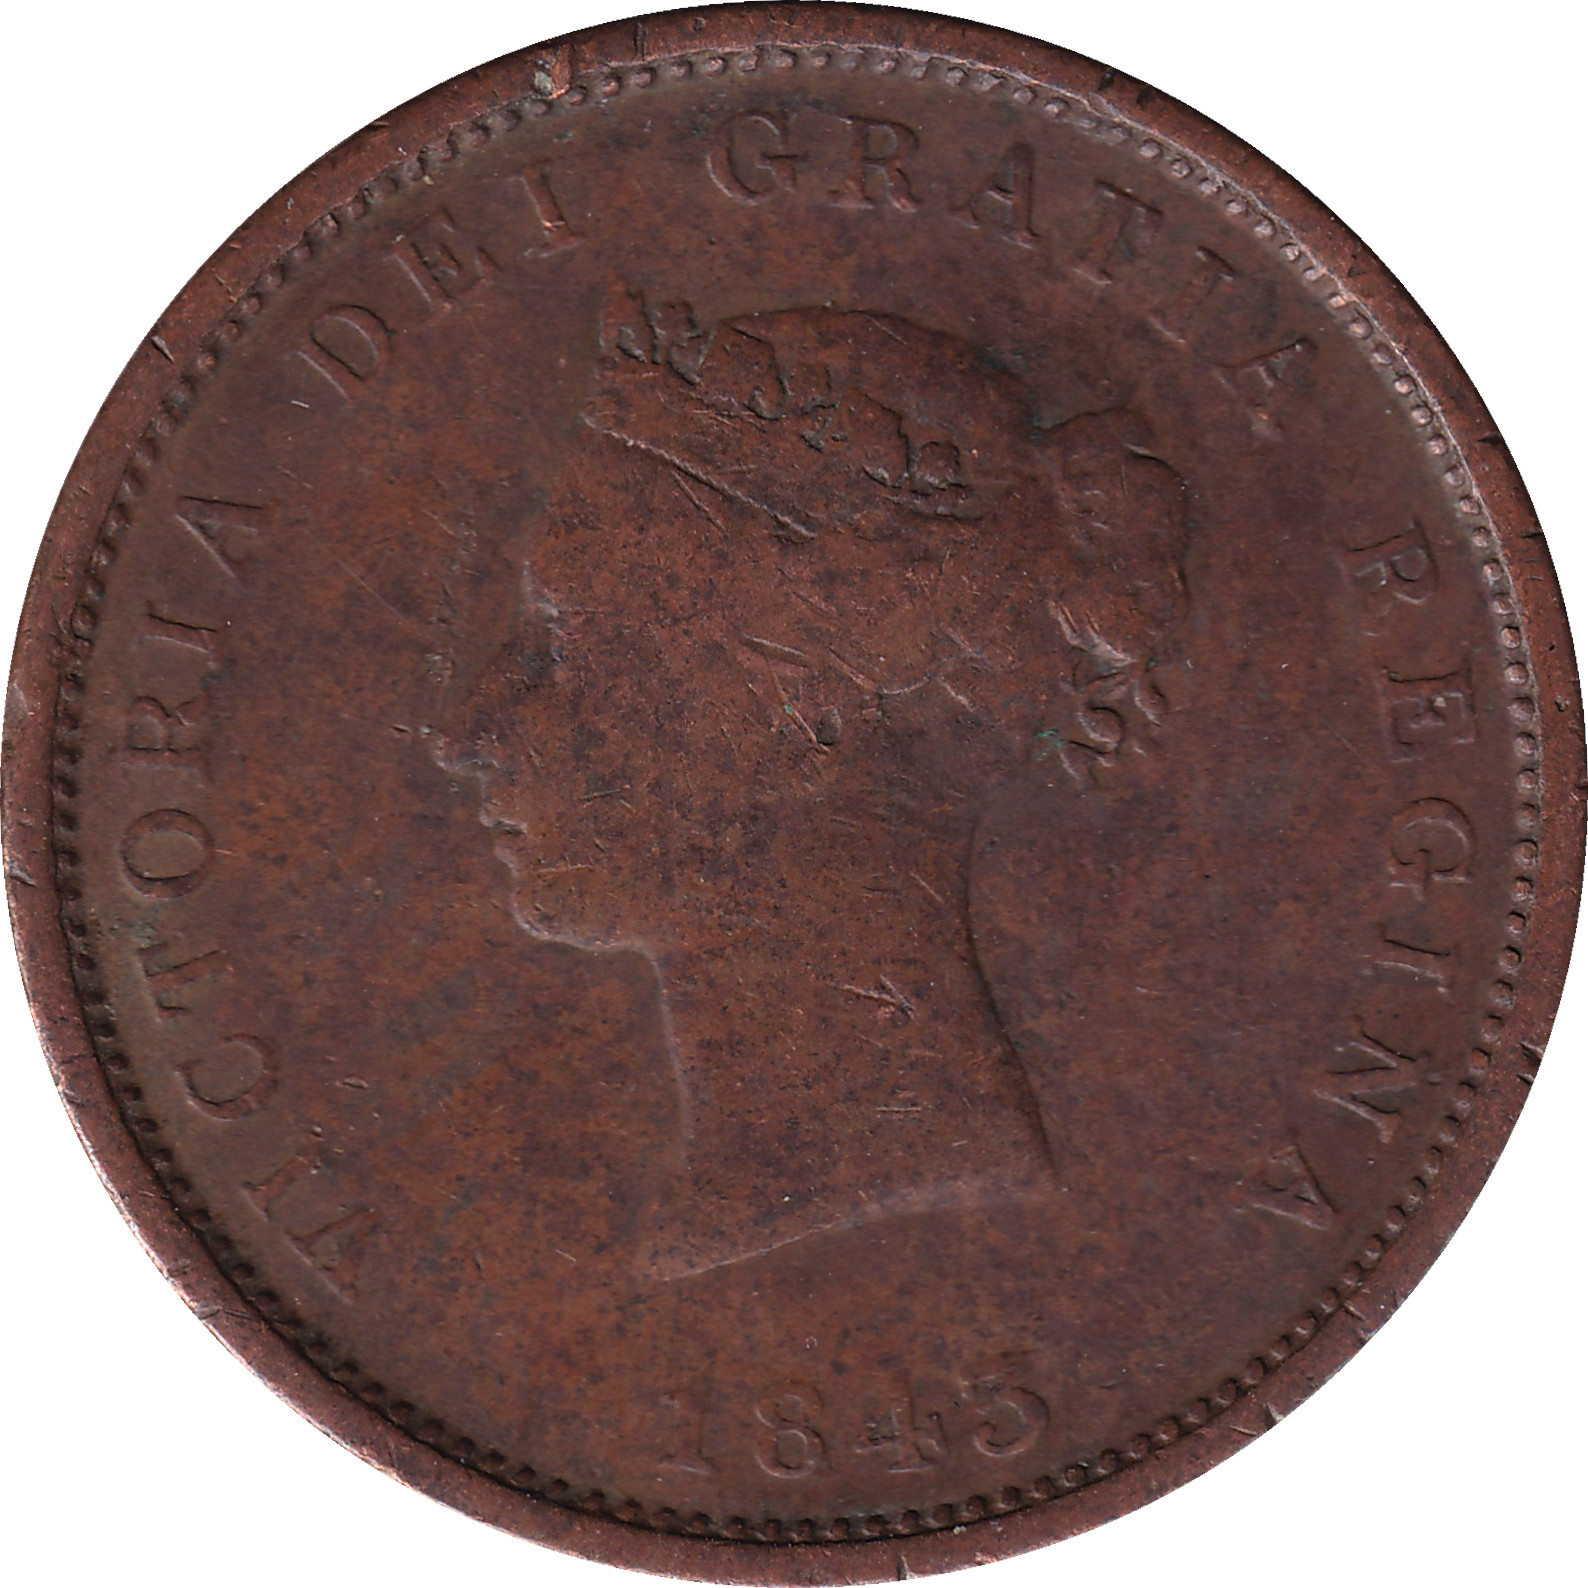 1 penny - Victoria - Young head